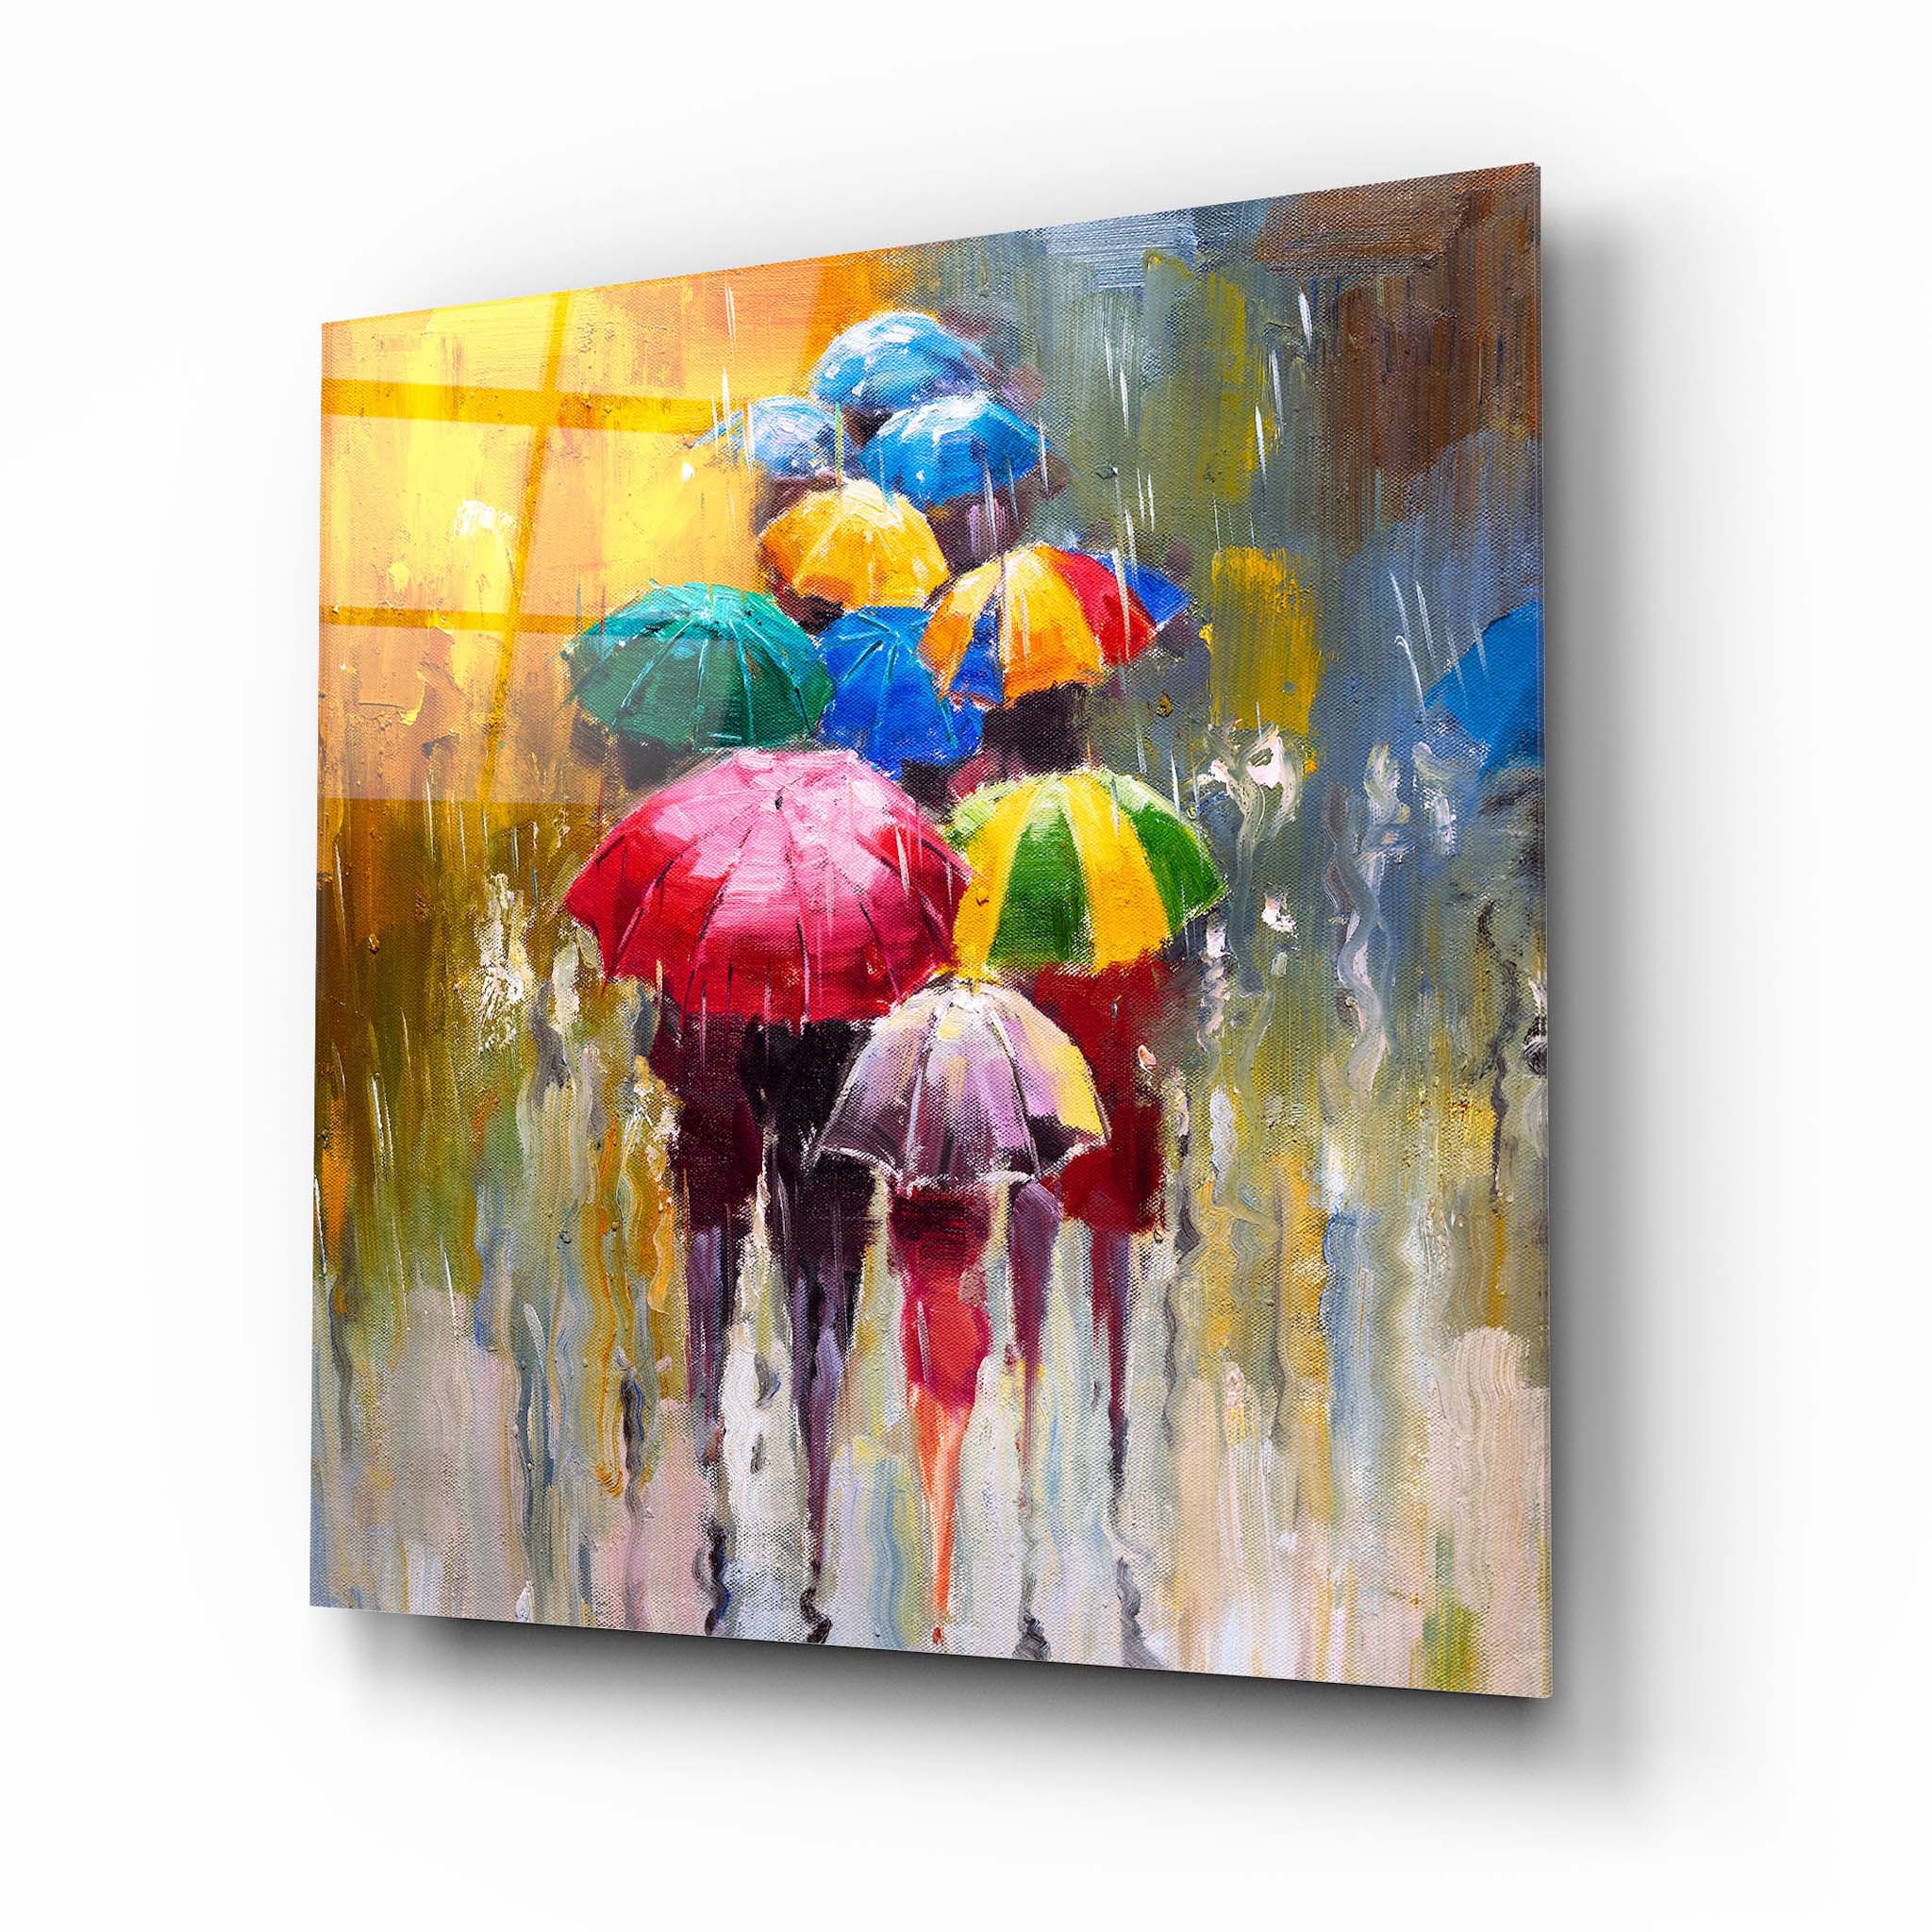 Colorful Umbrellas Glass Wall Art